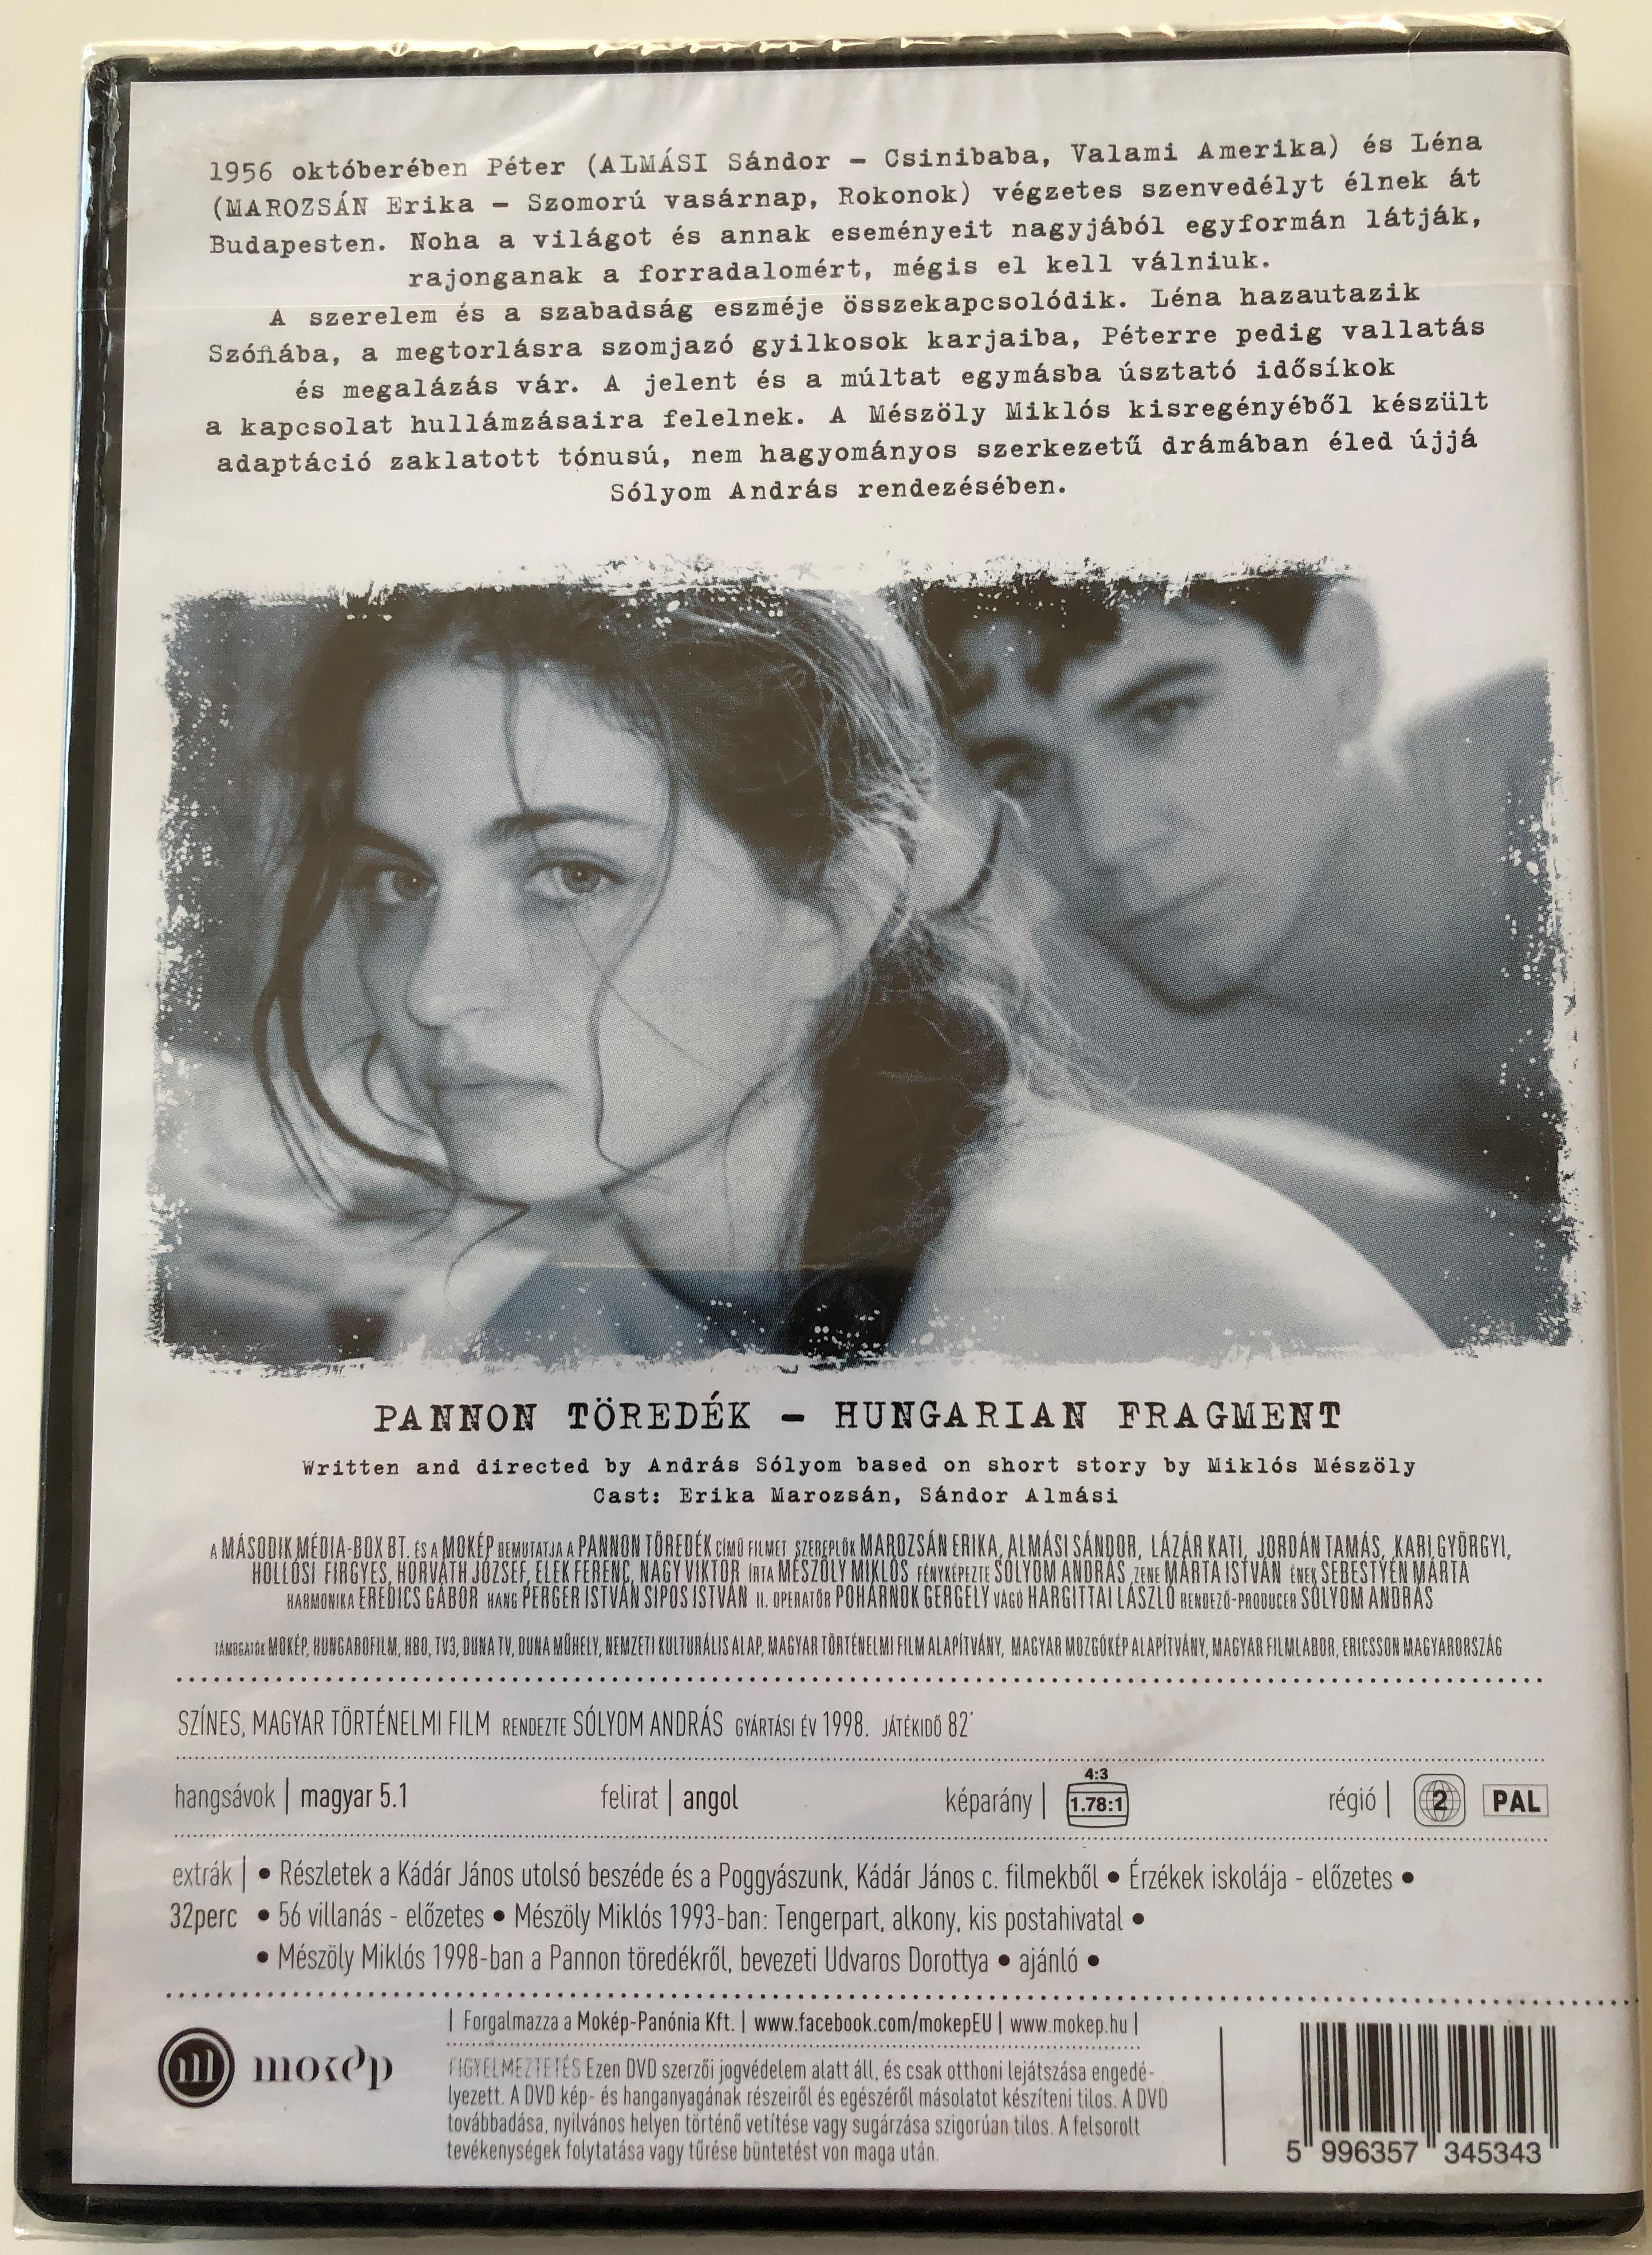 Pannon Töredék DVD 1998 Hungarian Fragment 1